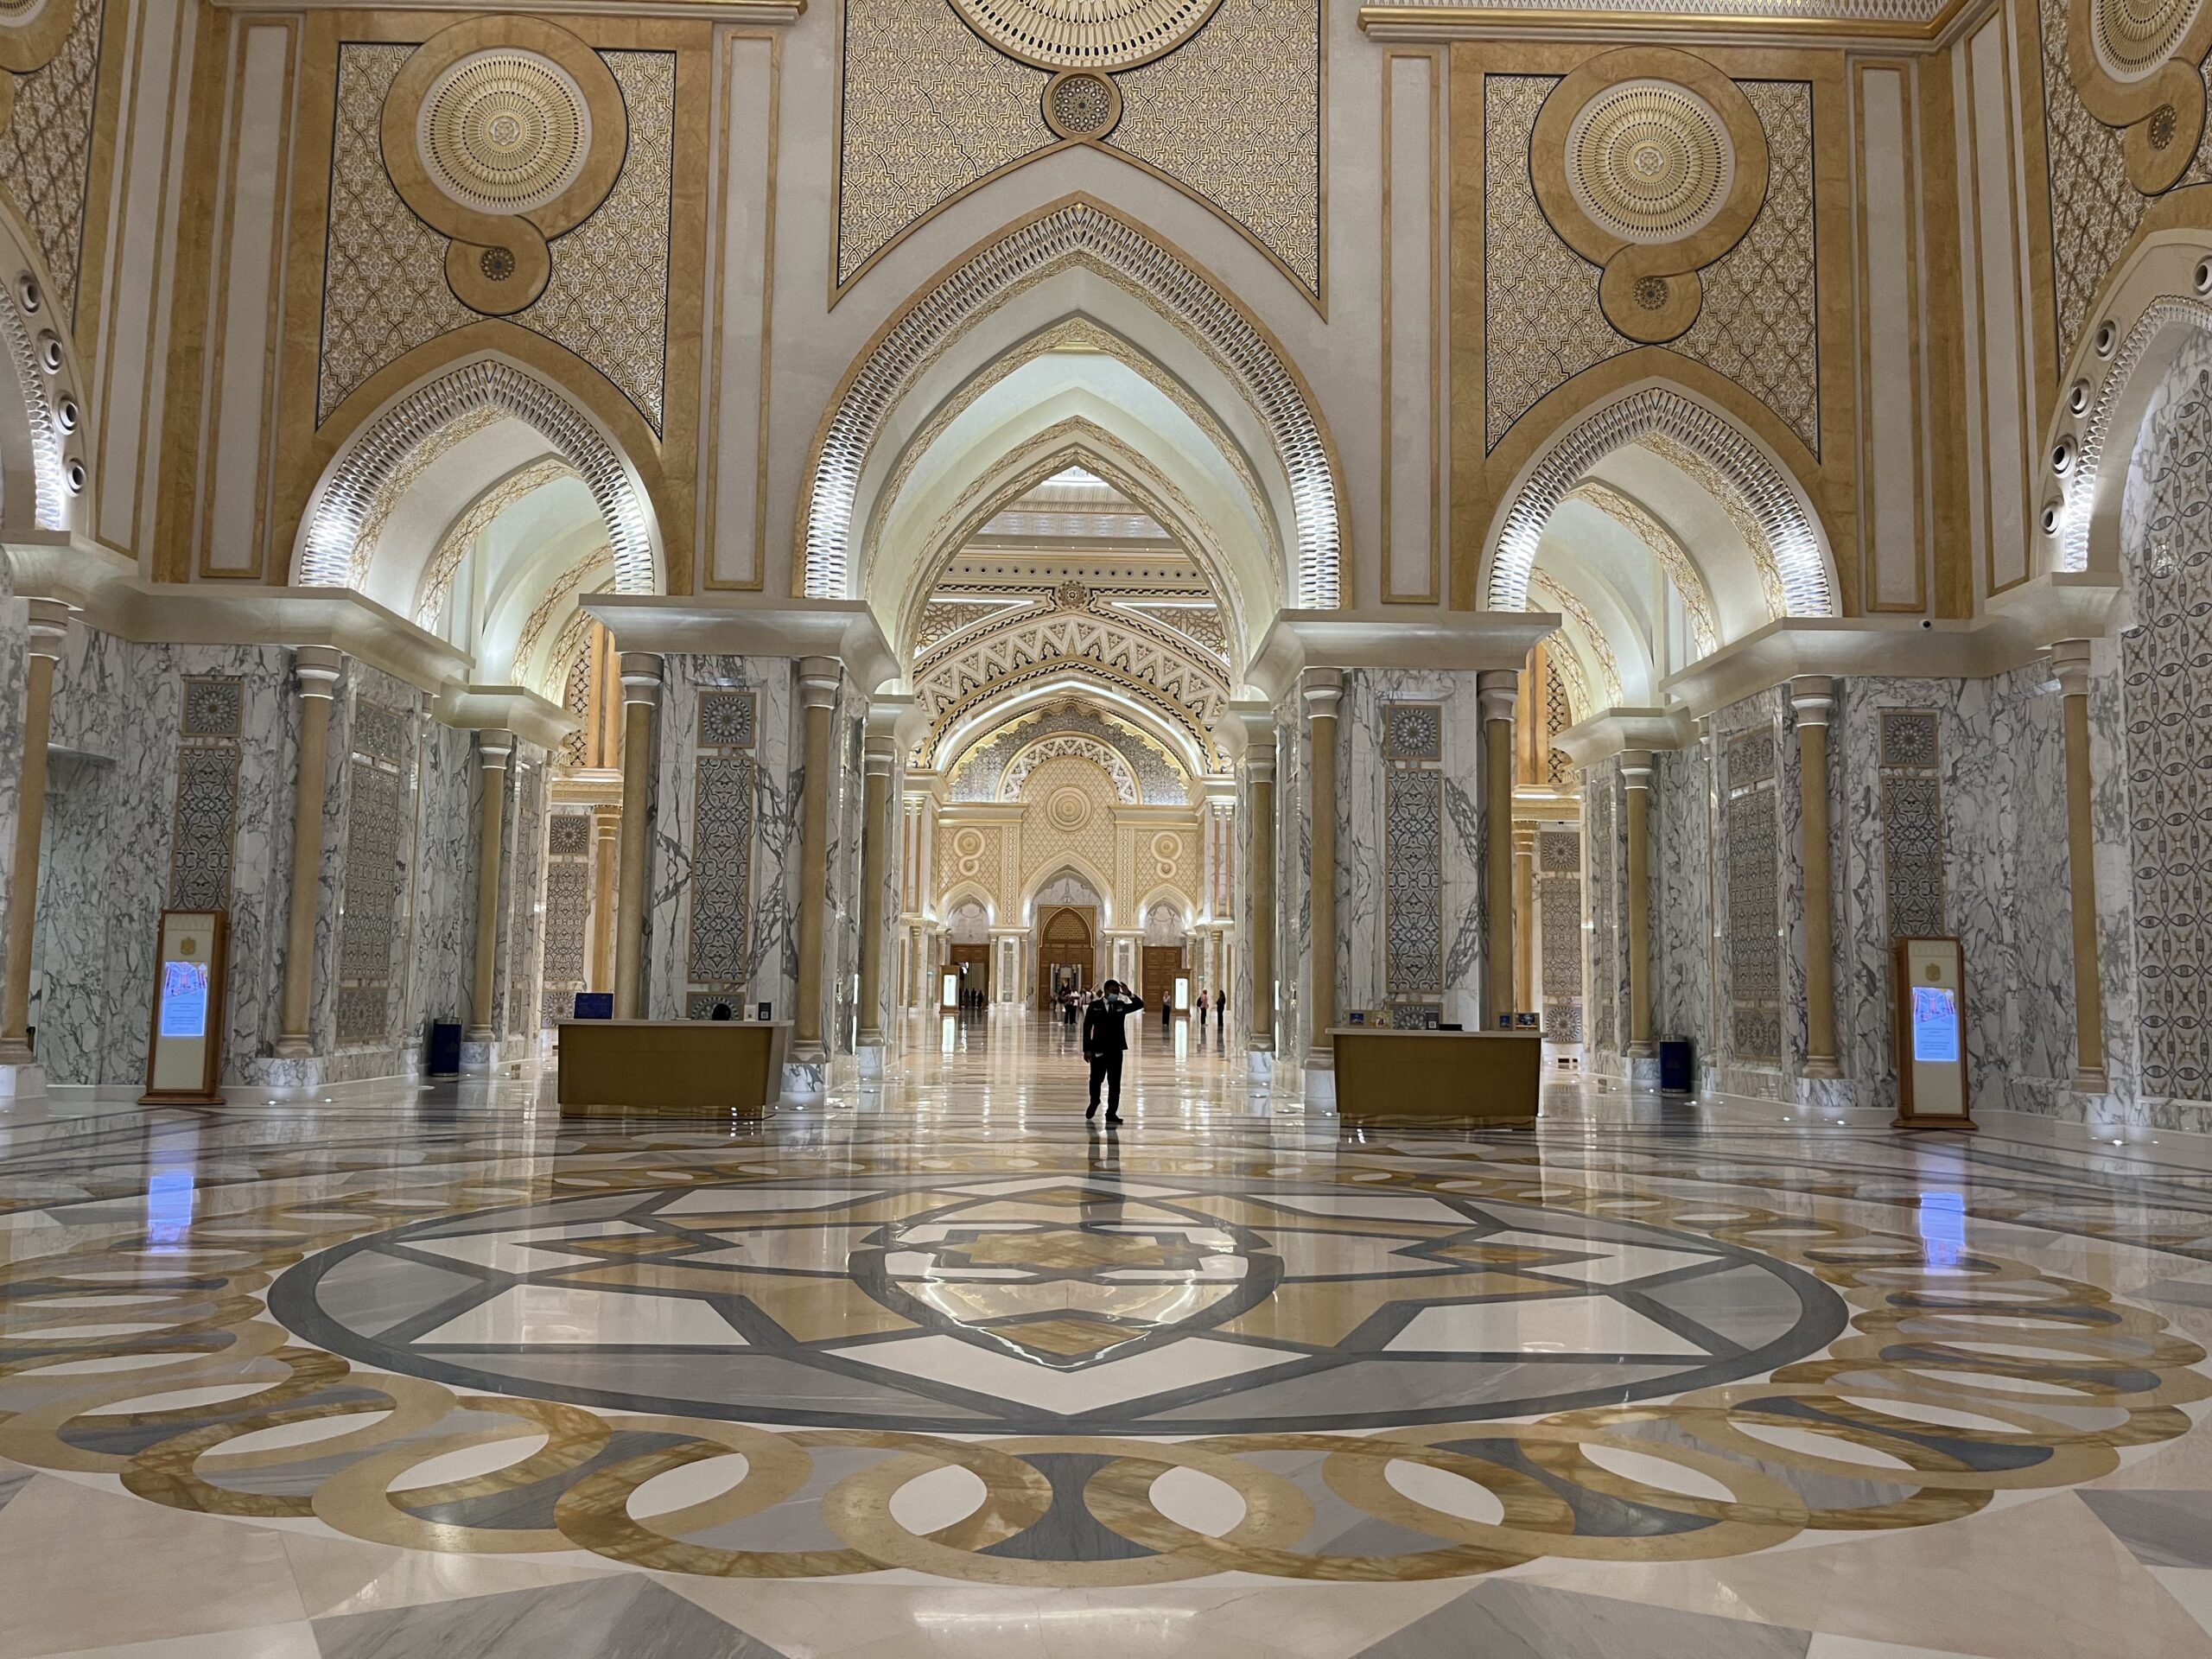 Beautiful and grand interiors at Qasr Al Watan